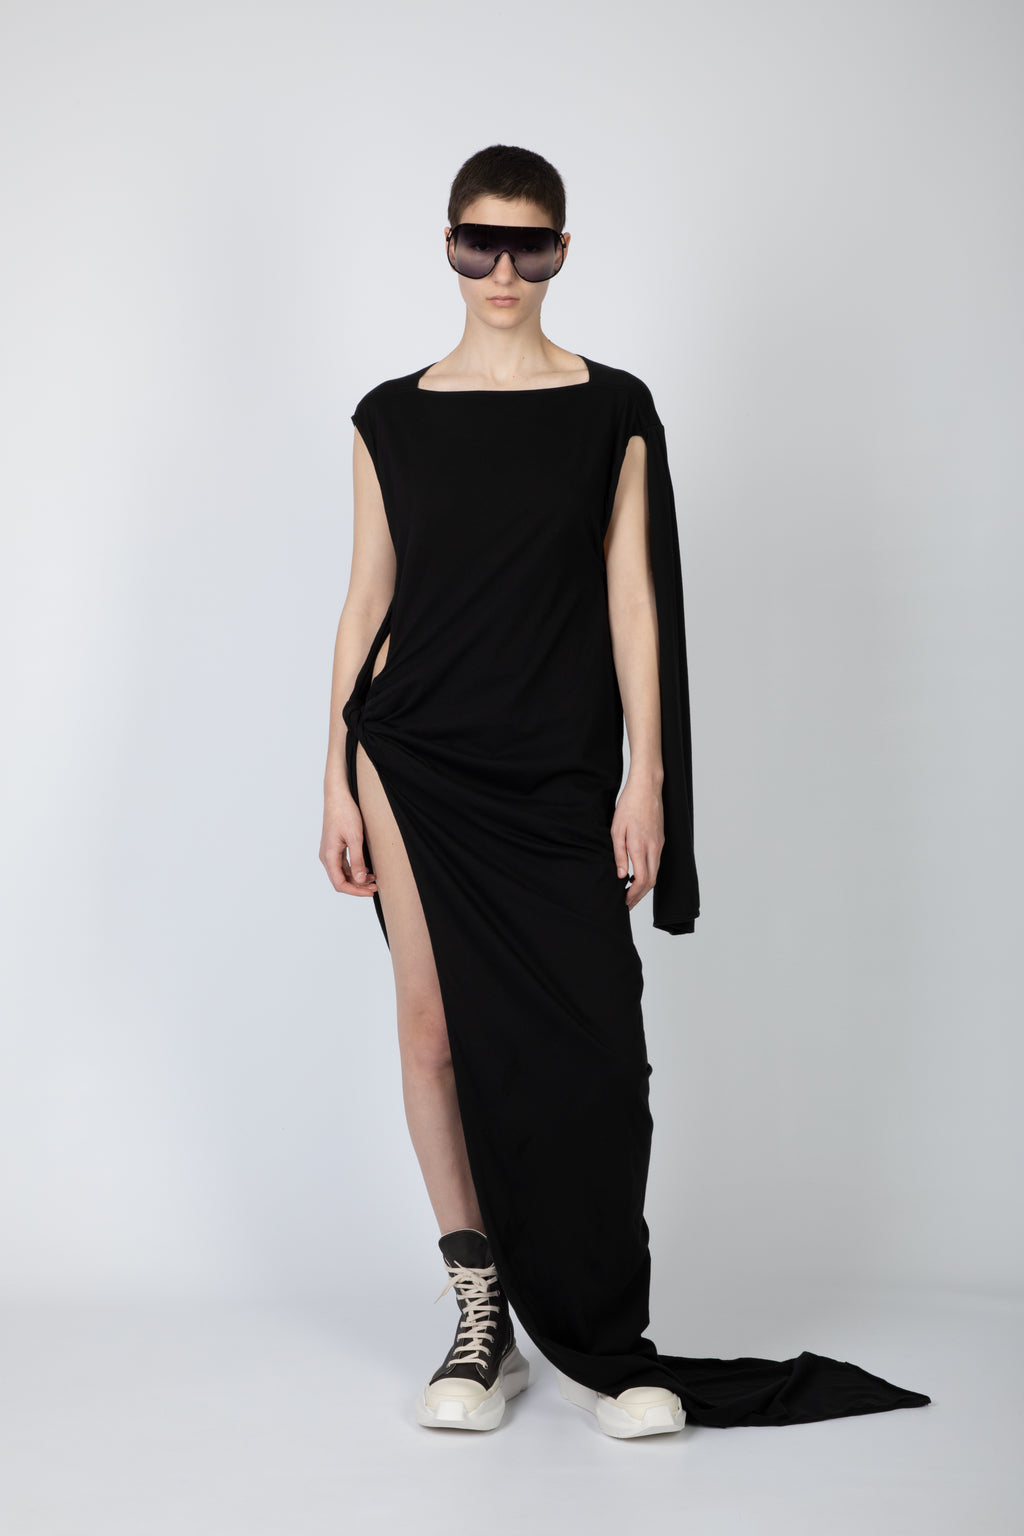 alt-image__Black-cotton-long-asymmetric-dress---Edfu-Gown